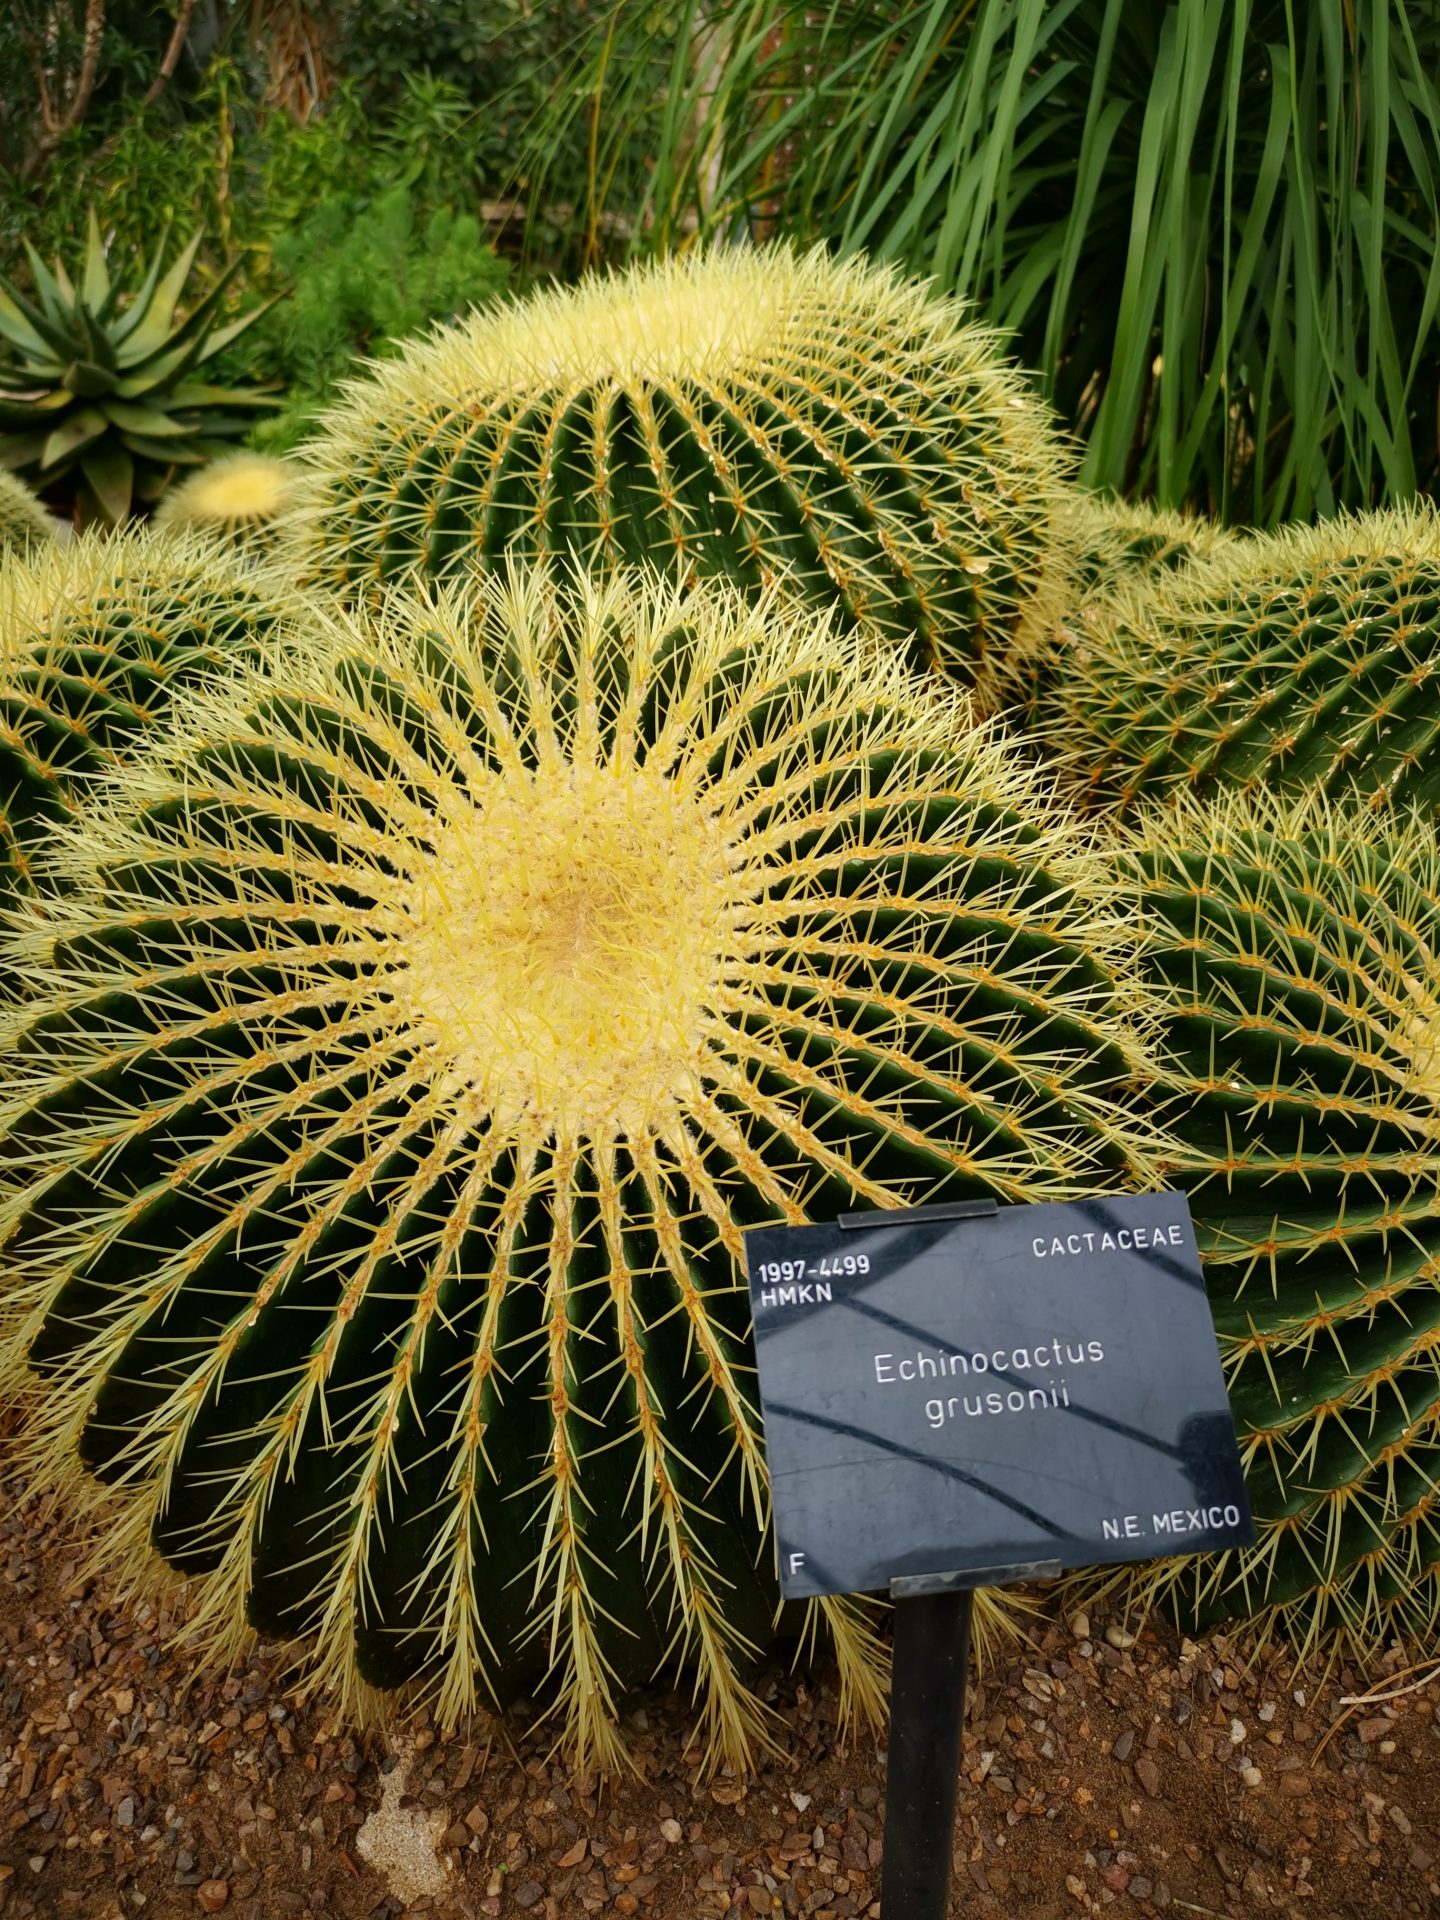 Kew garden cactus